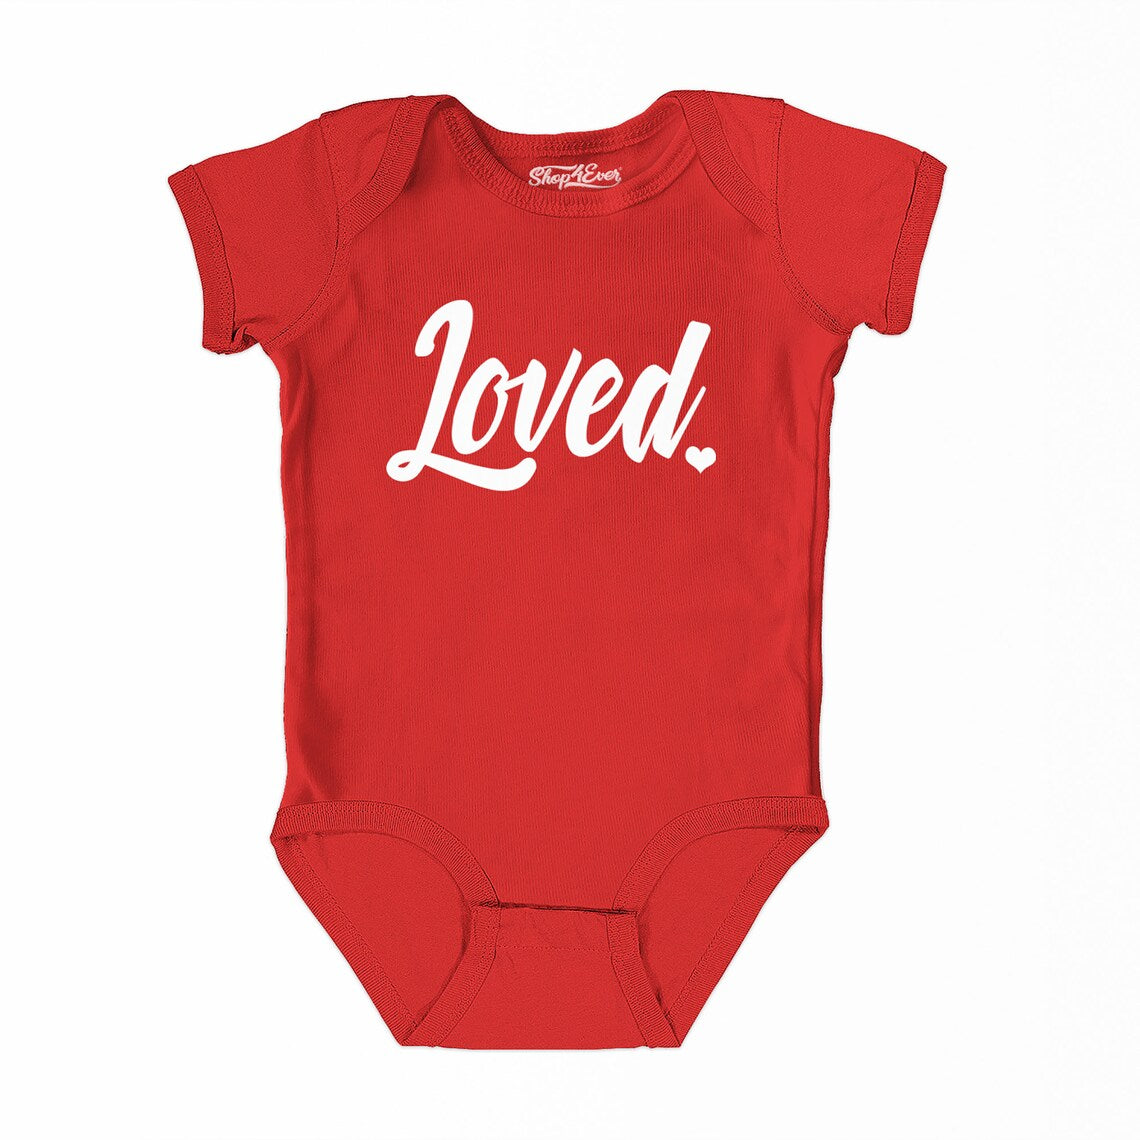 Loved Heart Valentine's Day Baby Bodysuit Cotton Romper